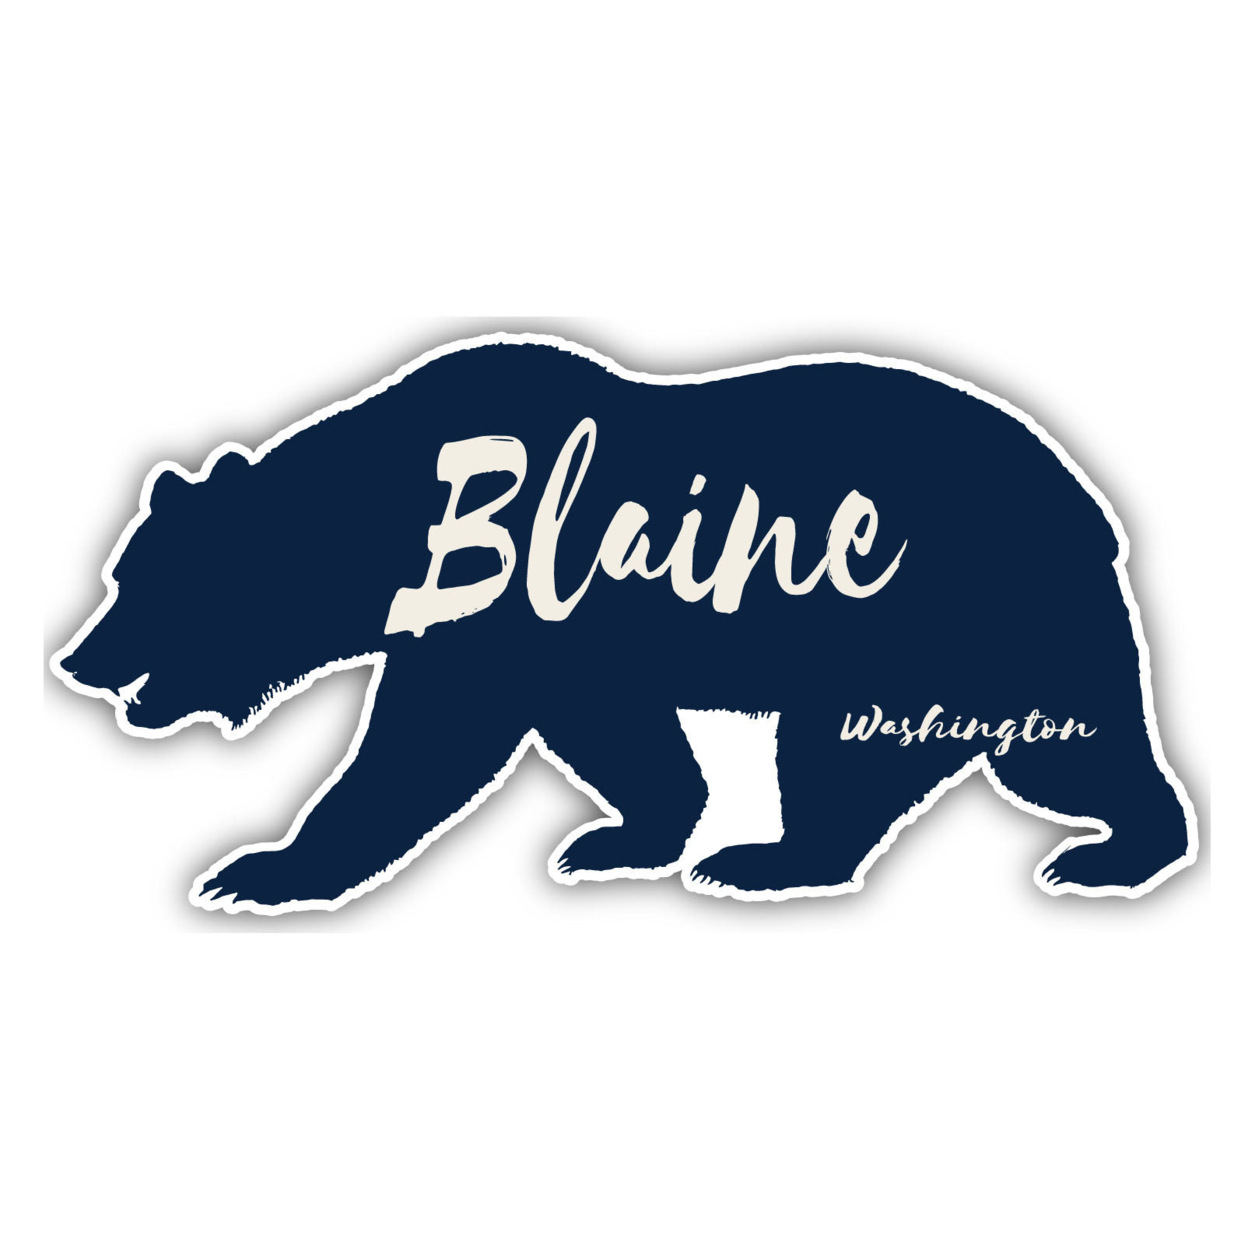 Blaine Washington Souvenir Decorative Stickers (Choose Theme And Size) - 4-Pack, 12-Inch, Bear